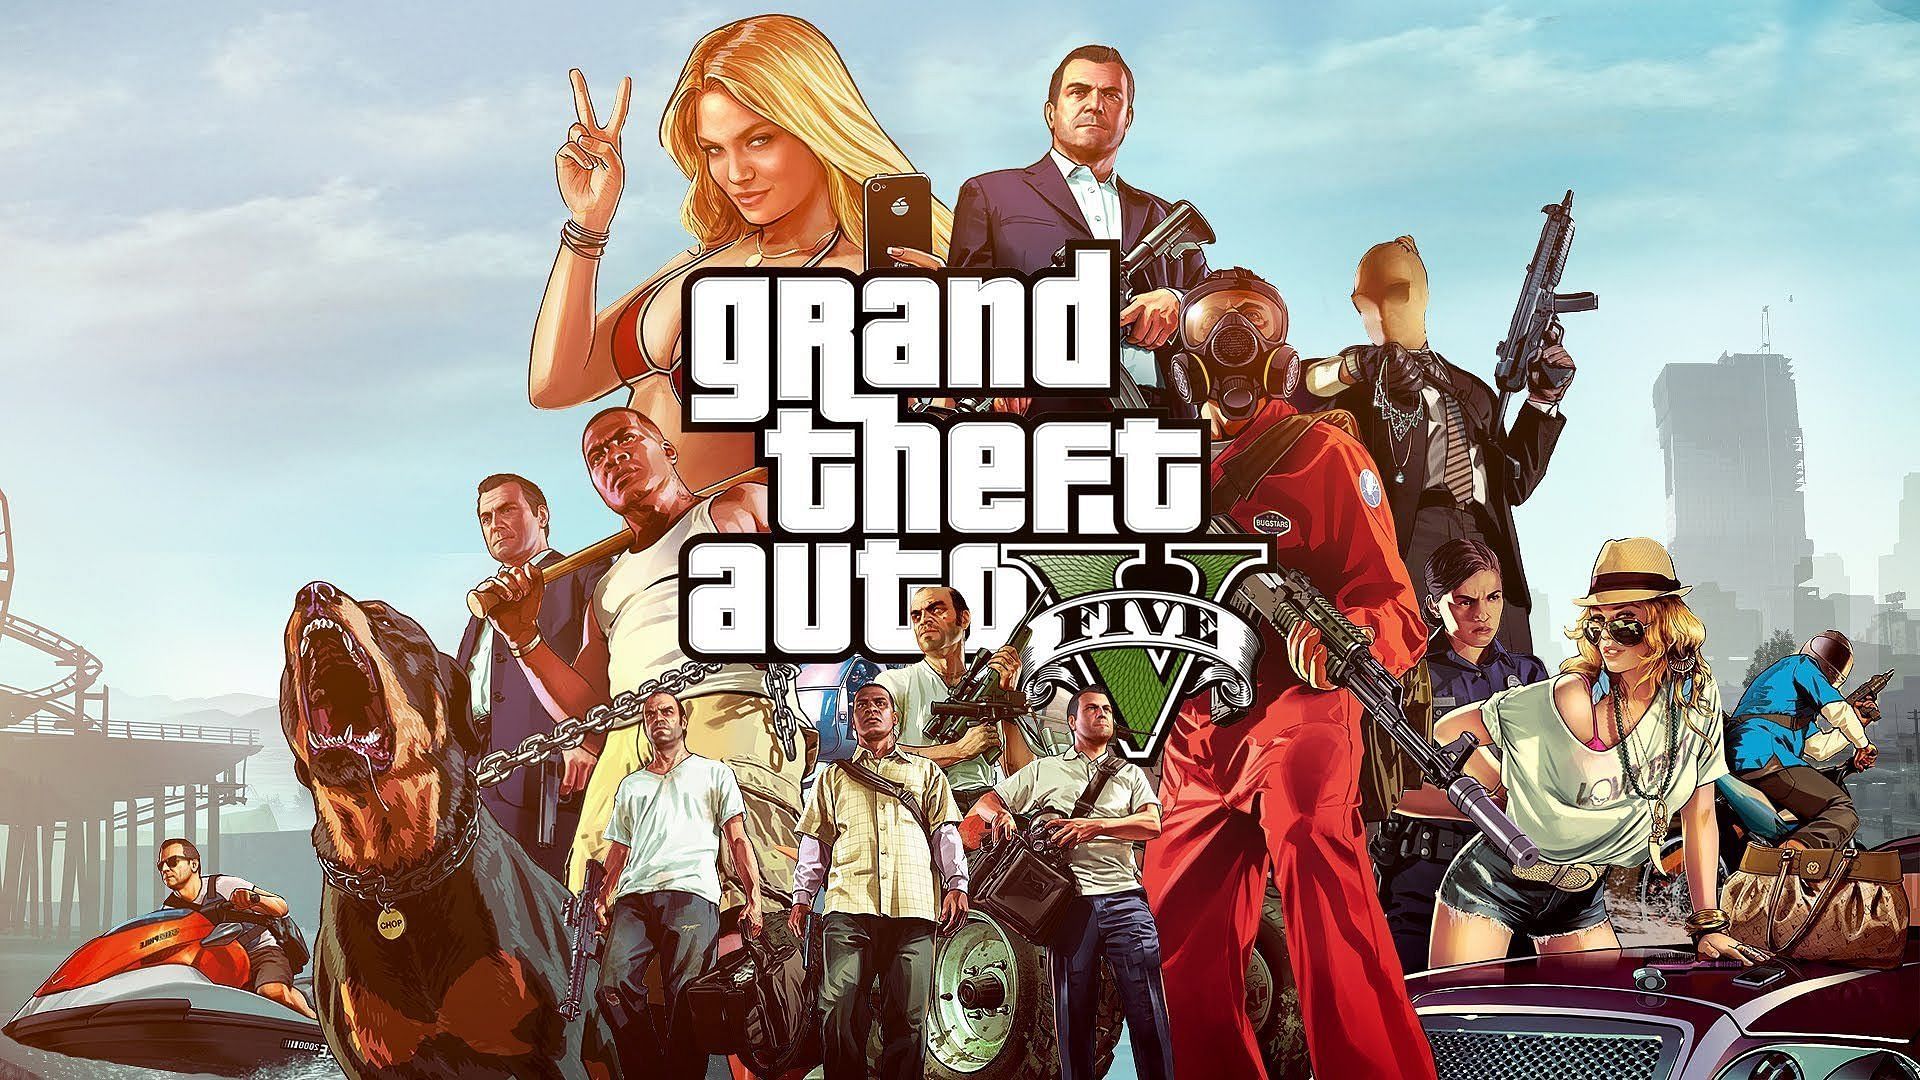 Grand Theft Auto 5 (image via Pinterest)